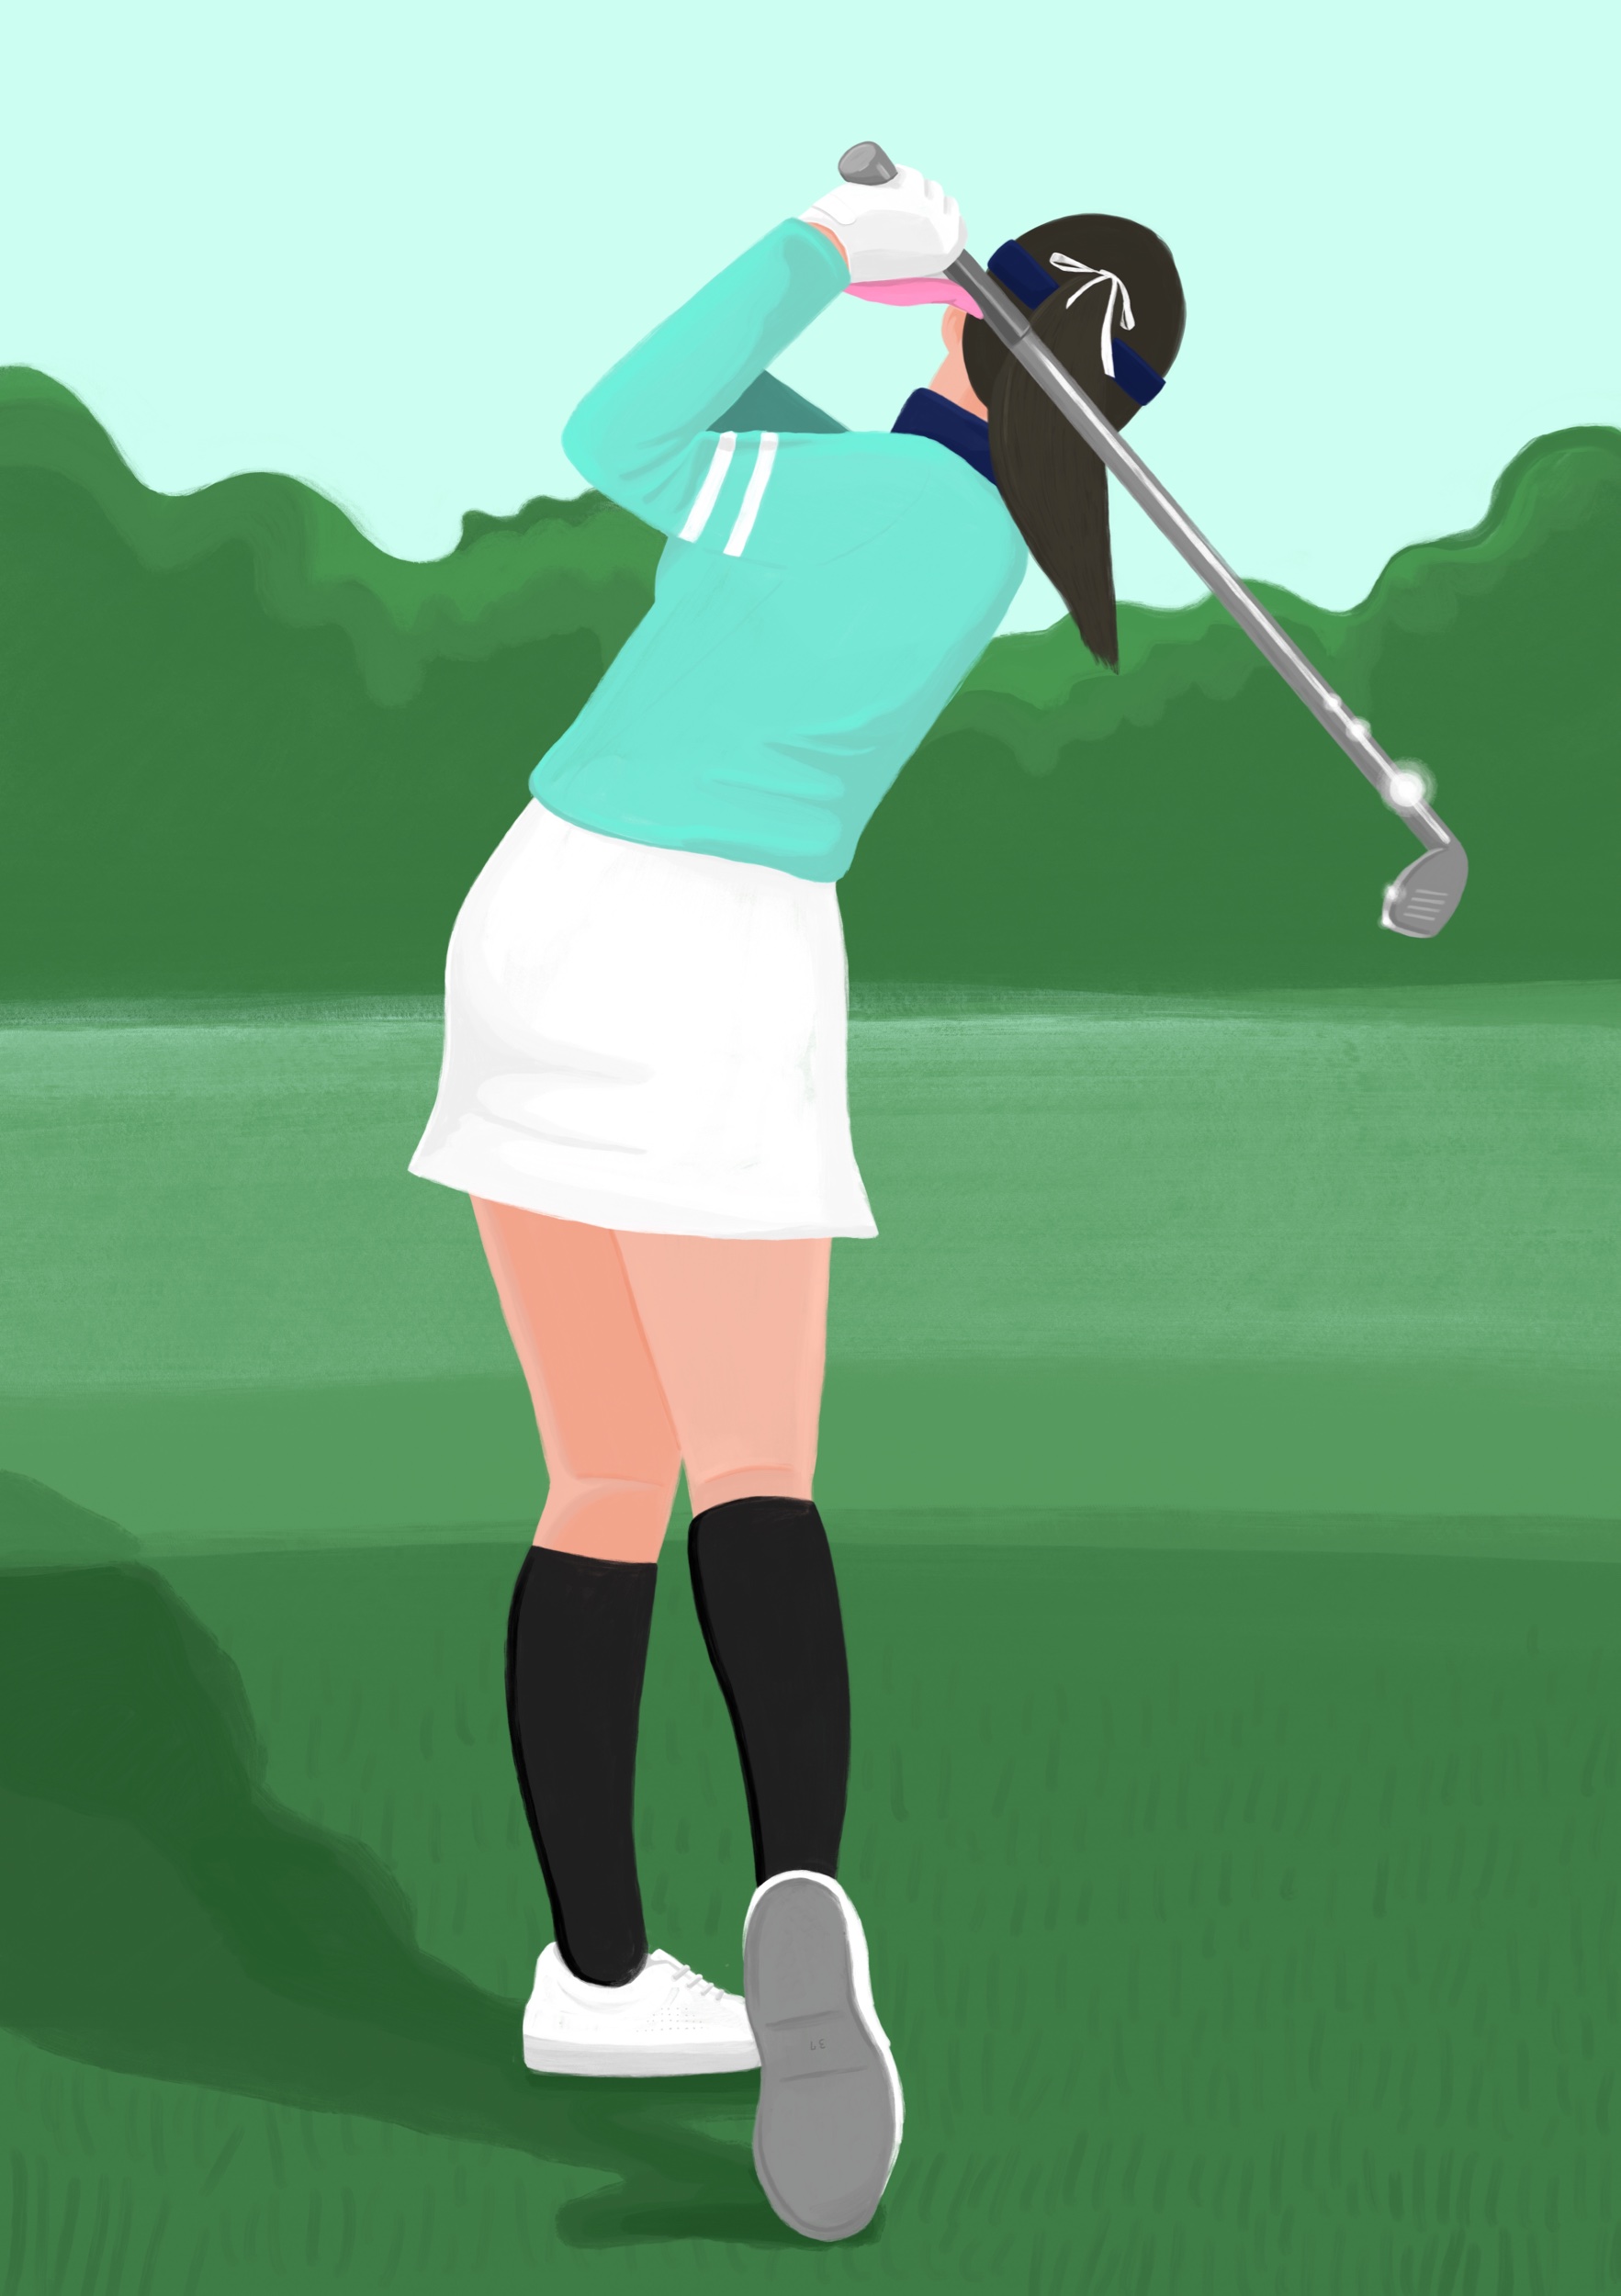 Golf swing motion (backside) 841x594mm Digital painting 2019